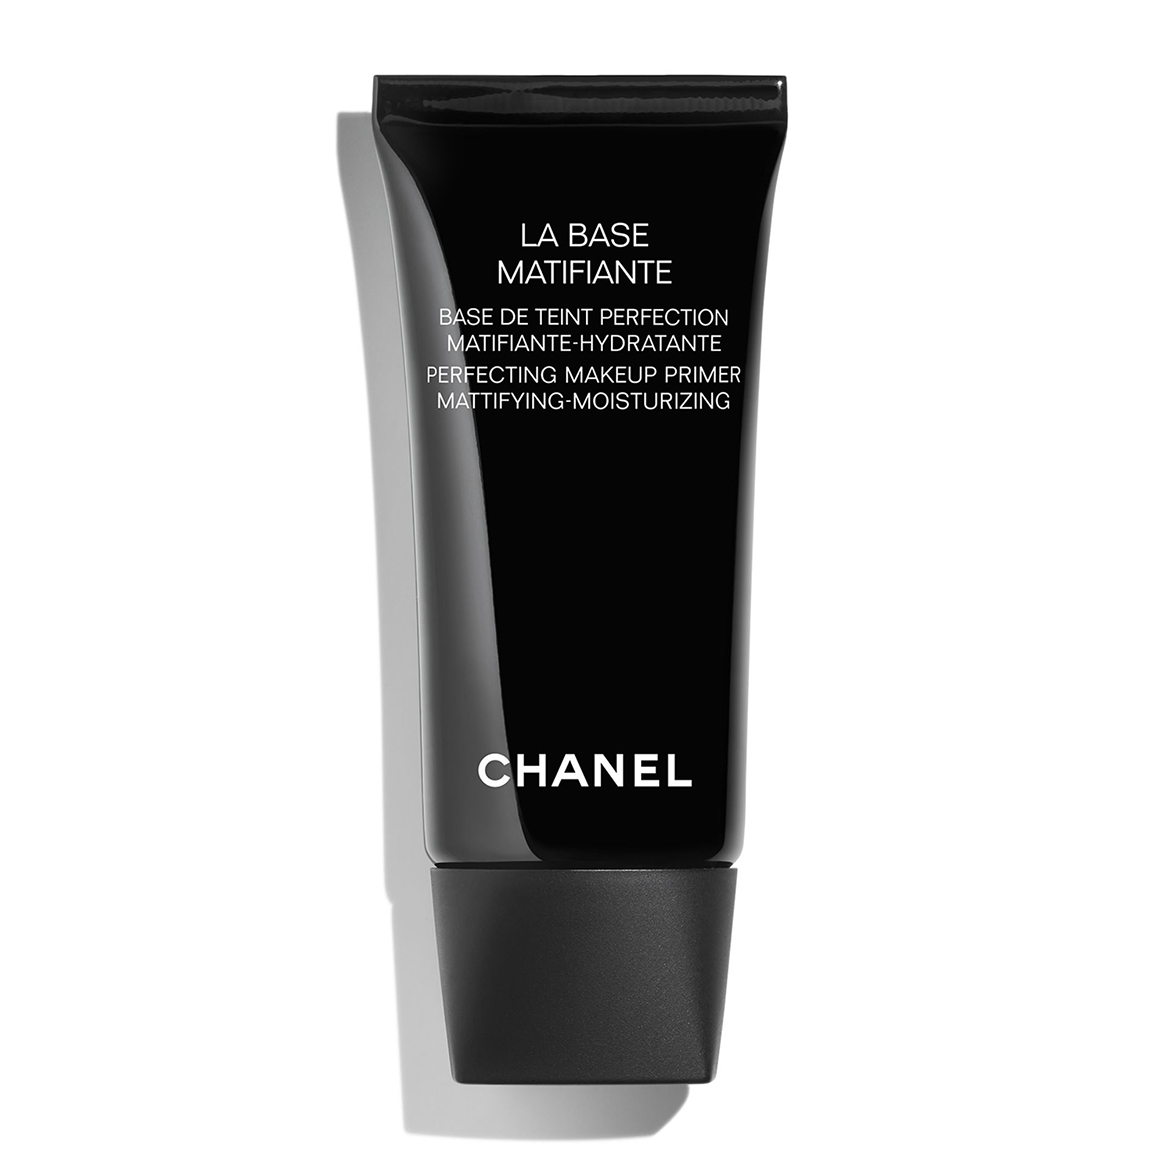 CHANEL LA BASE MATIFIANTE Perfecting Makeup Primer | Woolworths.co.za